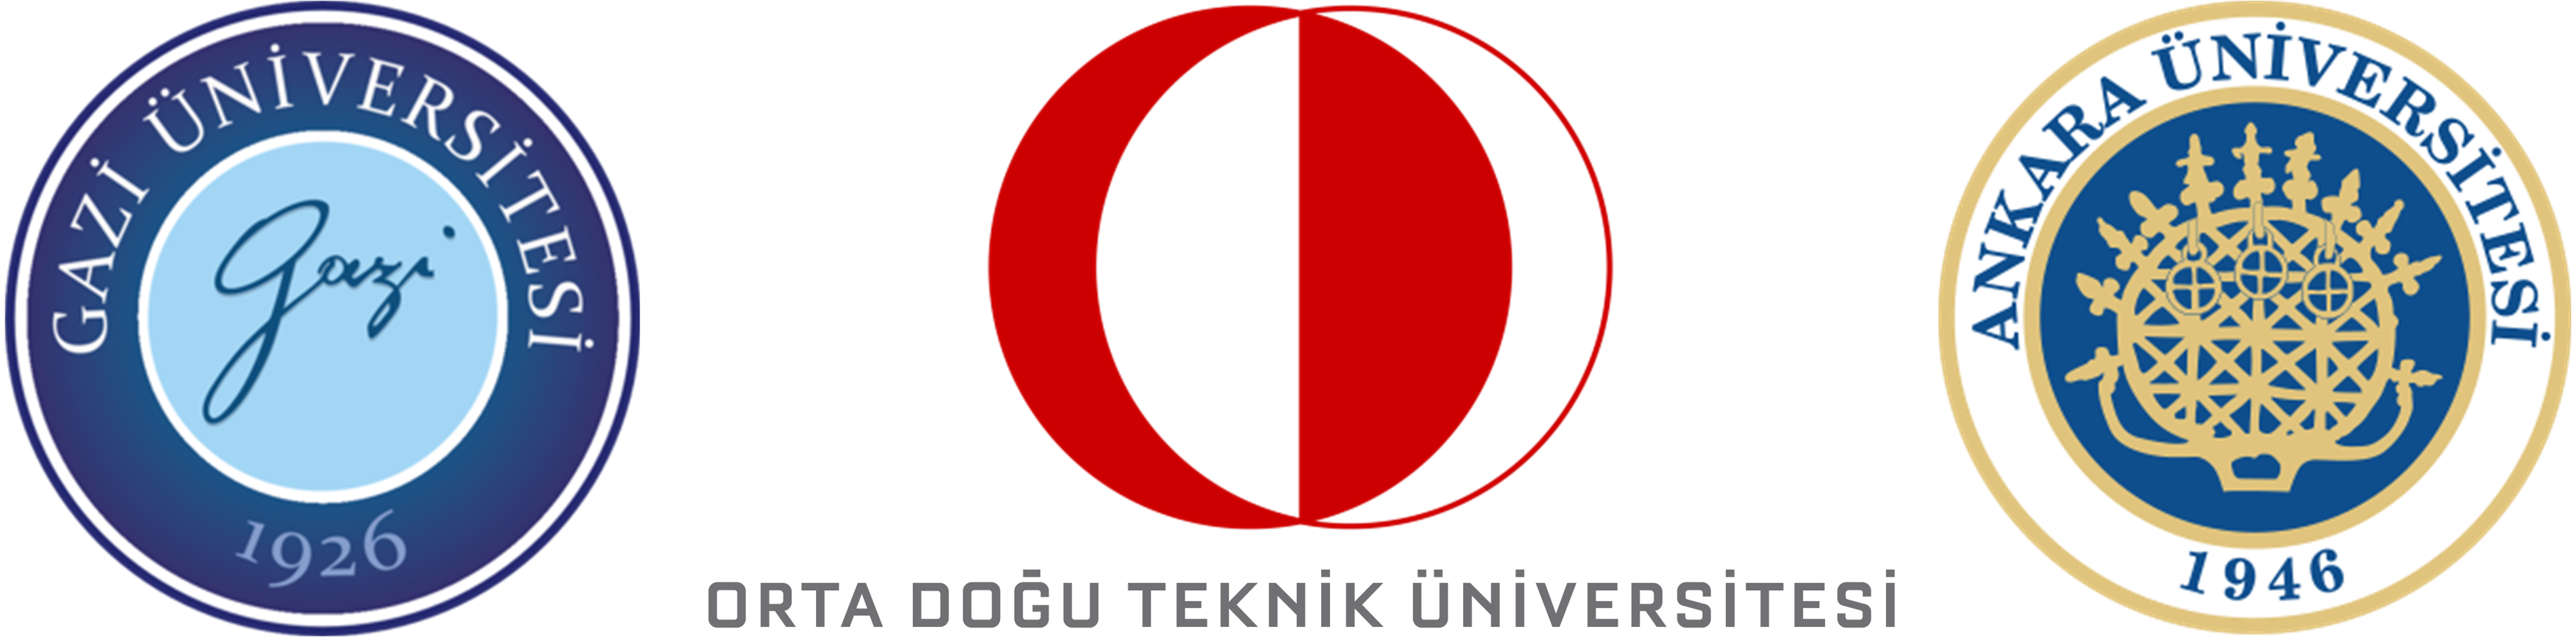 logo-gazi-odtu-ankara-1